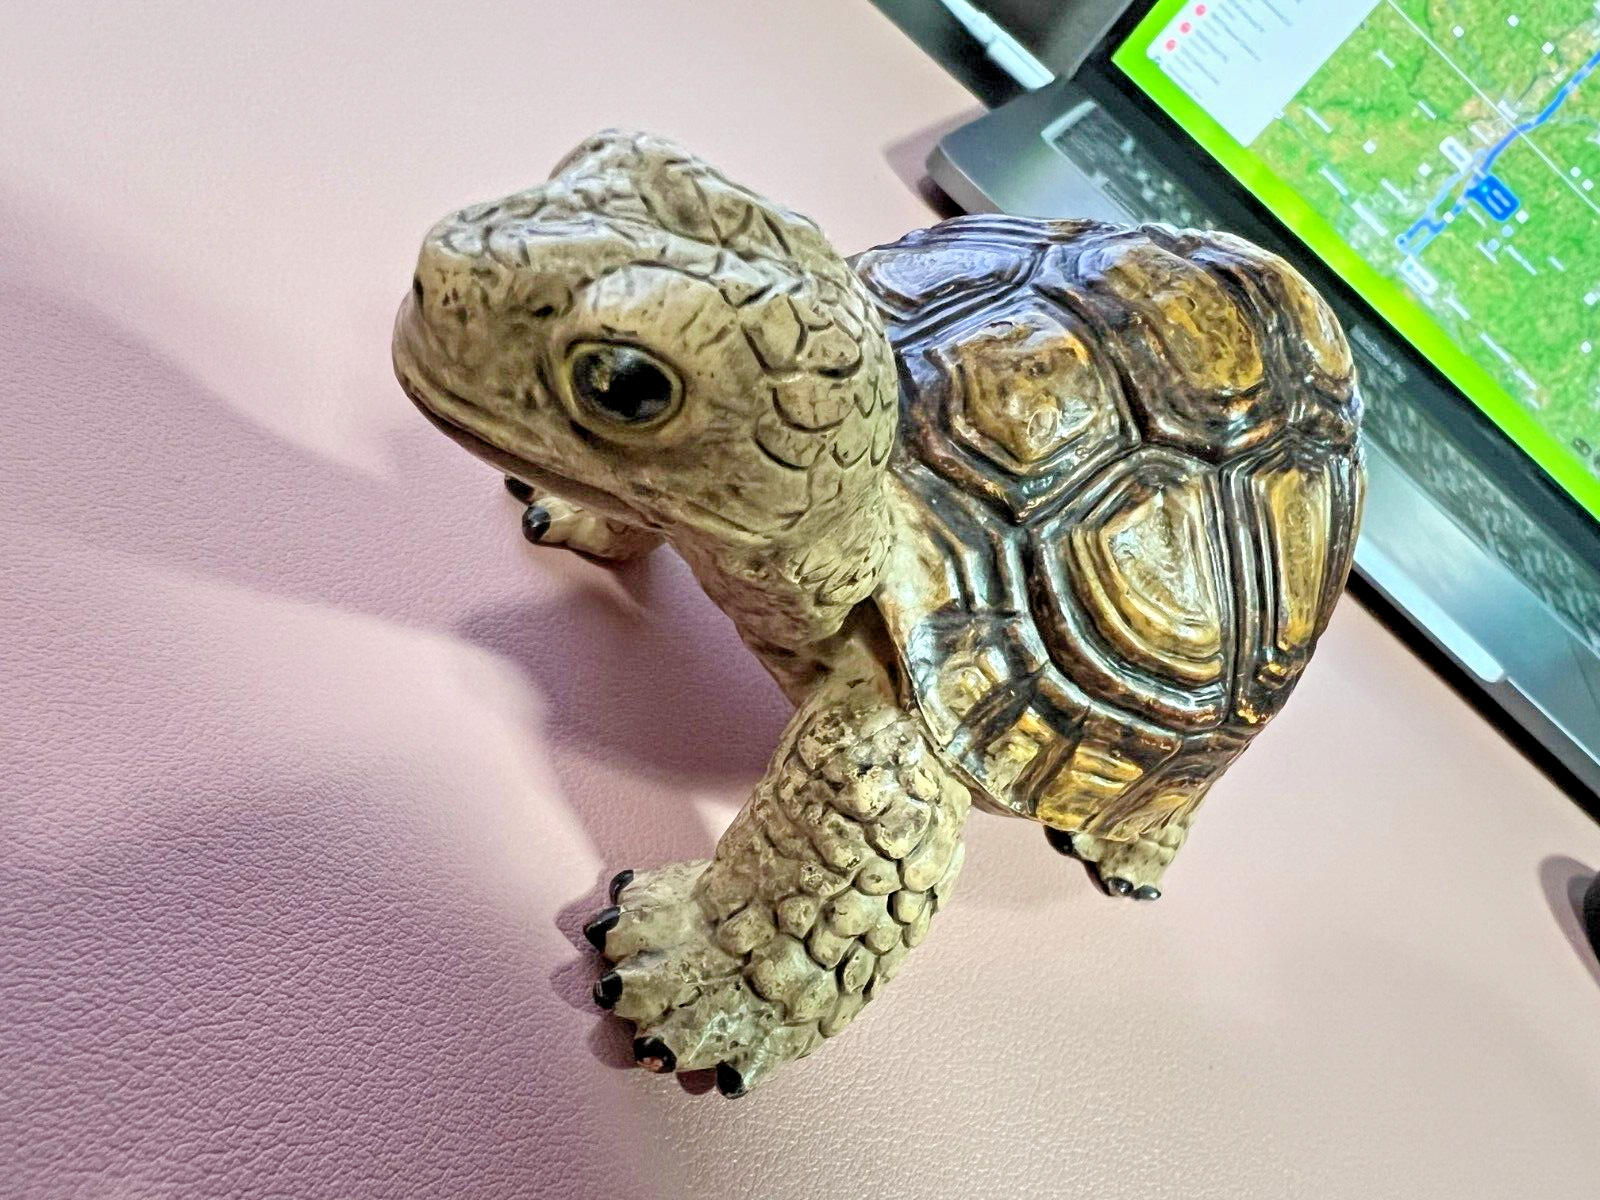 1997 Safari Ltd. Tortoise Figurine Toy Realistic